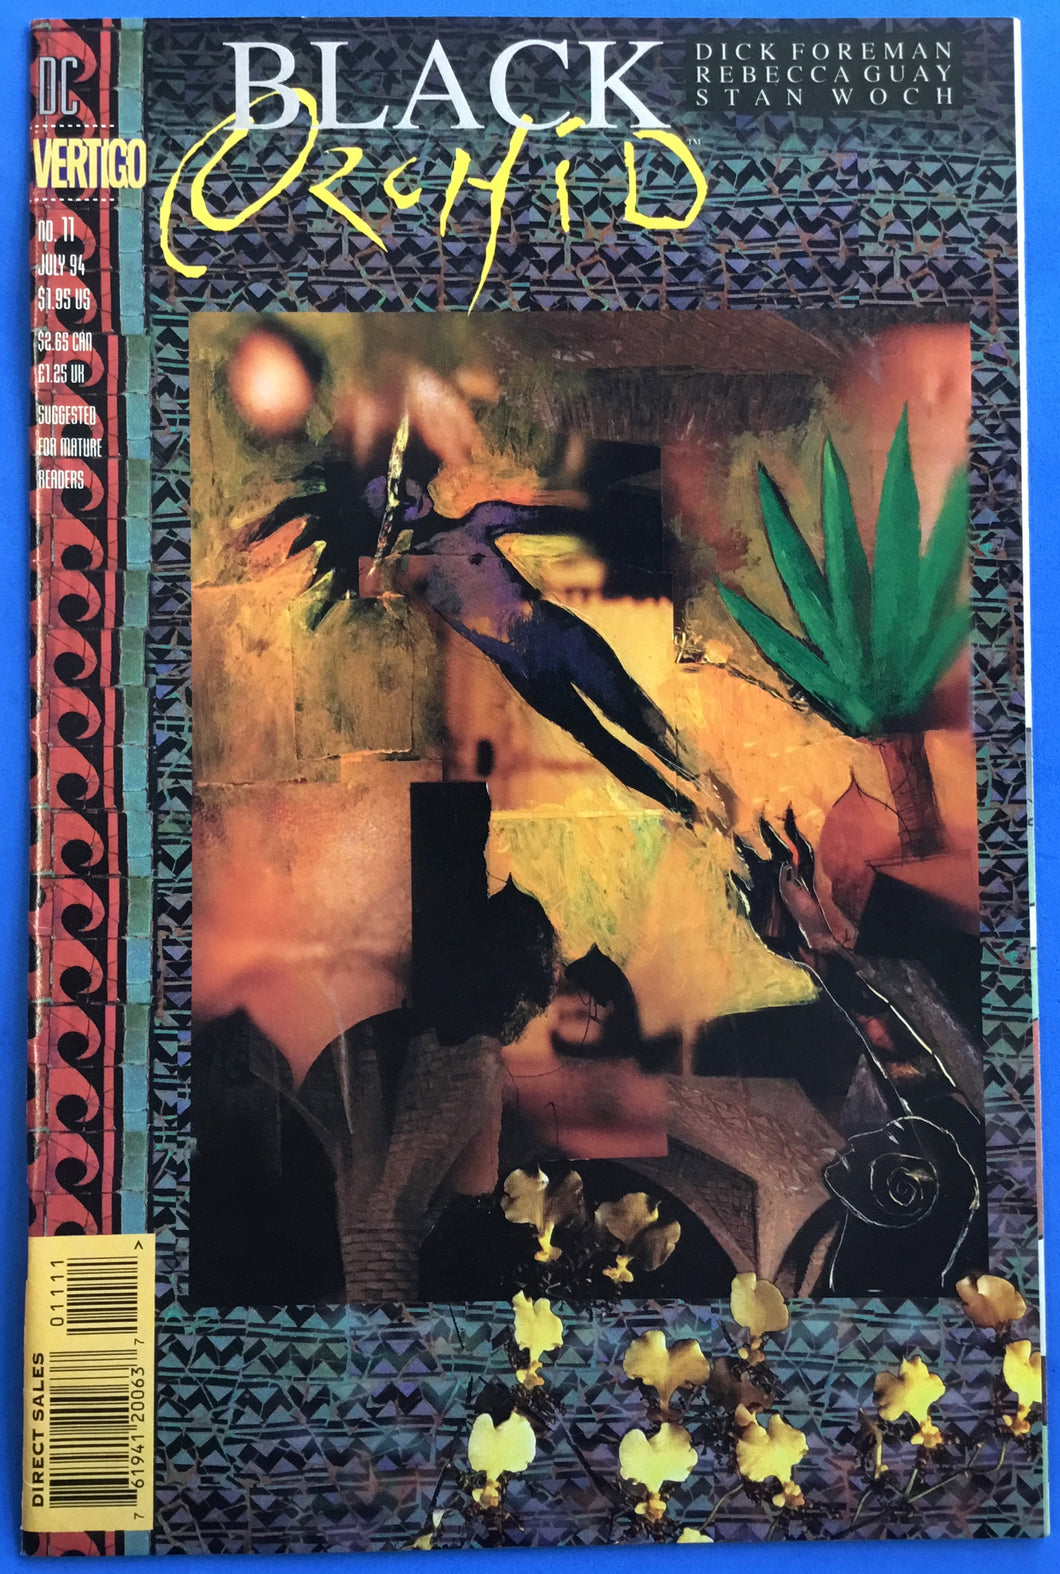 Black Orchid No. #11 1994 Vertigo Comics